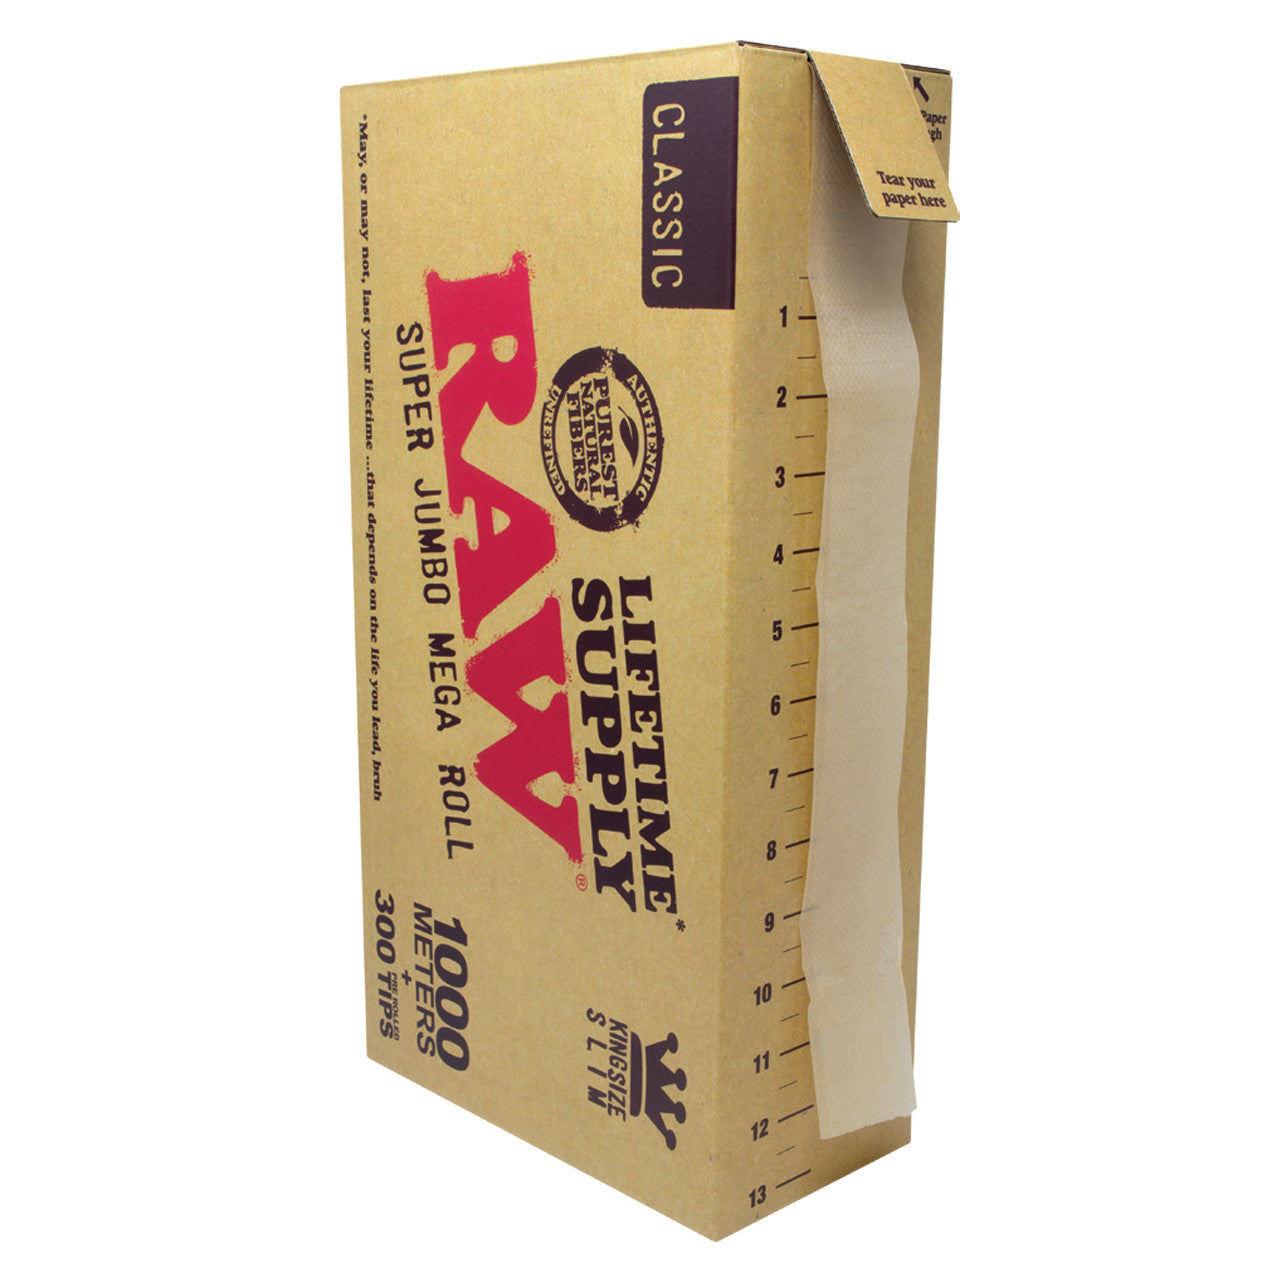 RAW Classic Super Jumbo Mega Roll - 1000m Paper + 300ct Tips